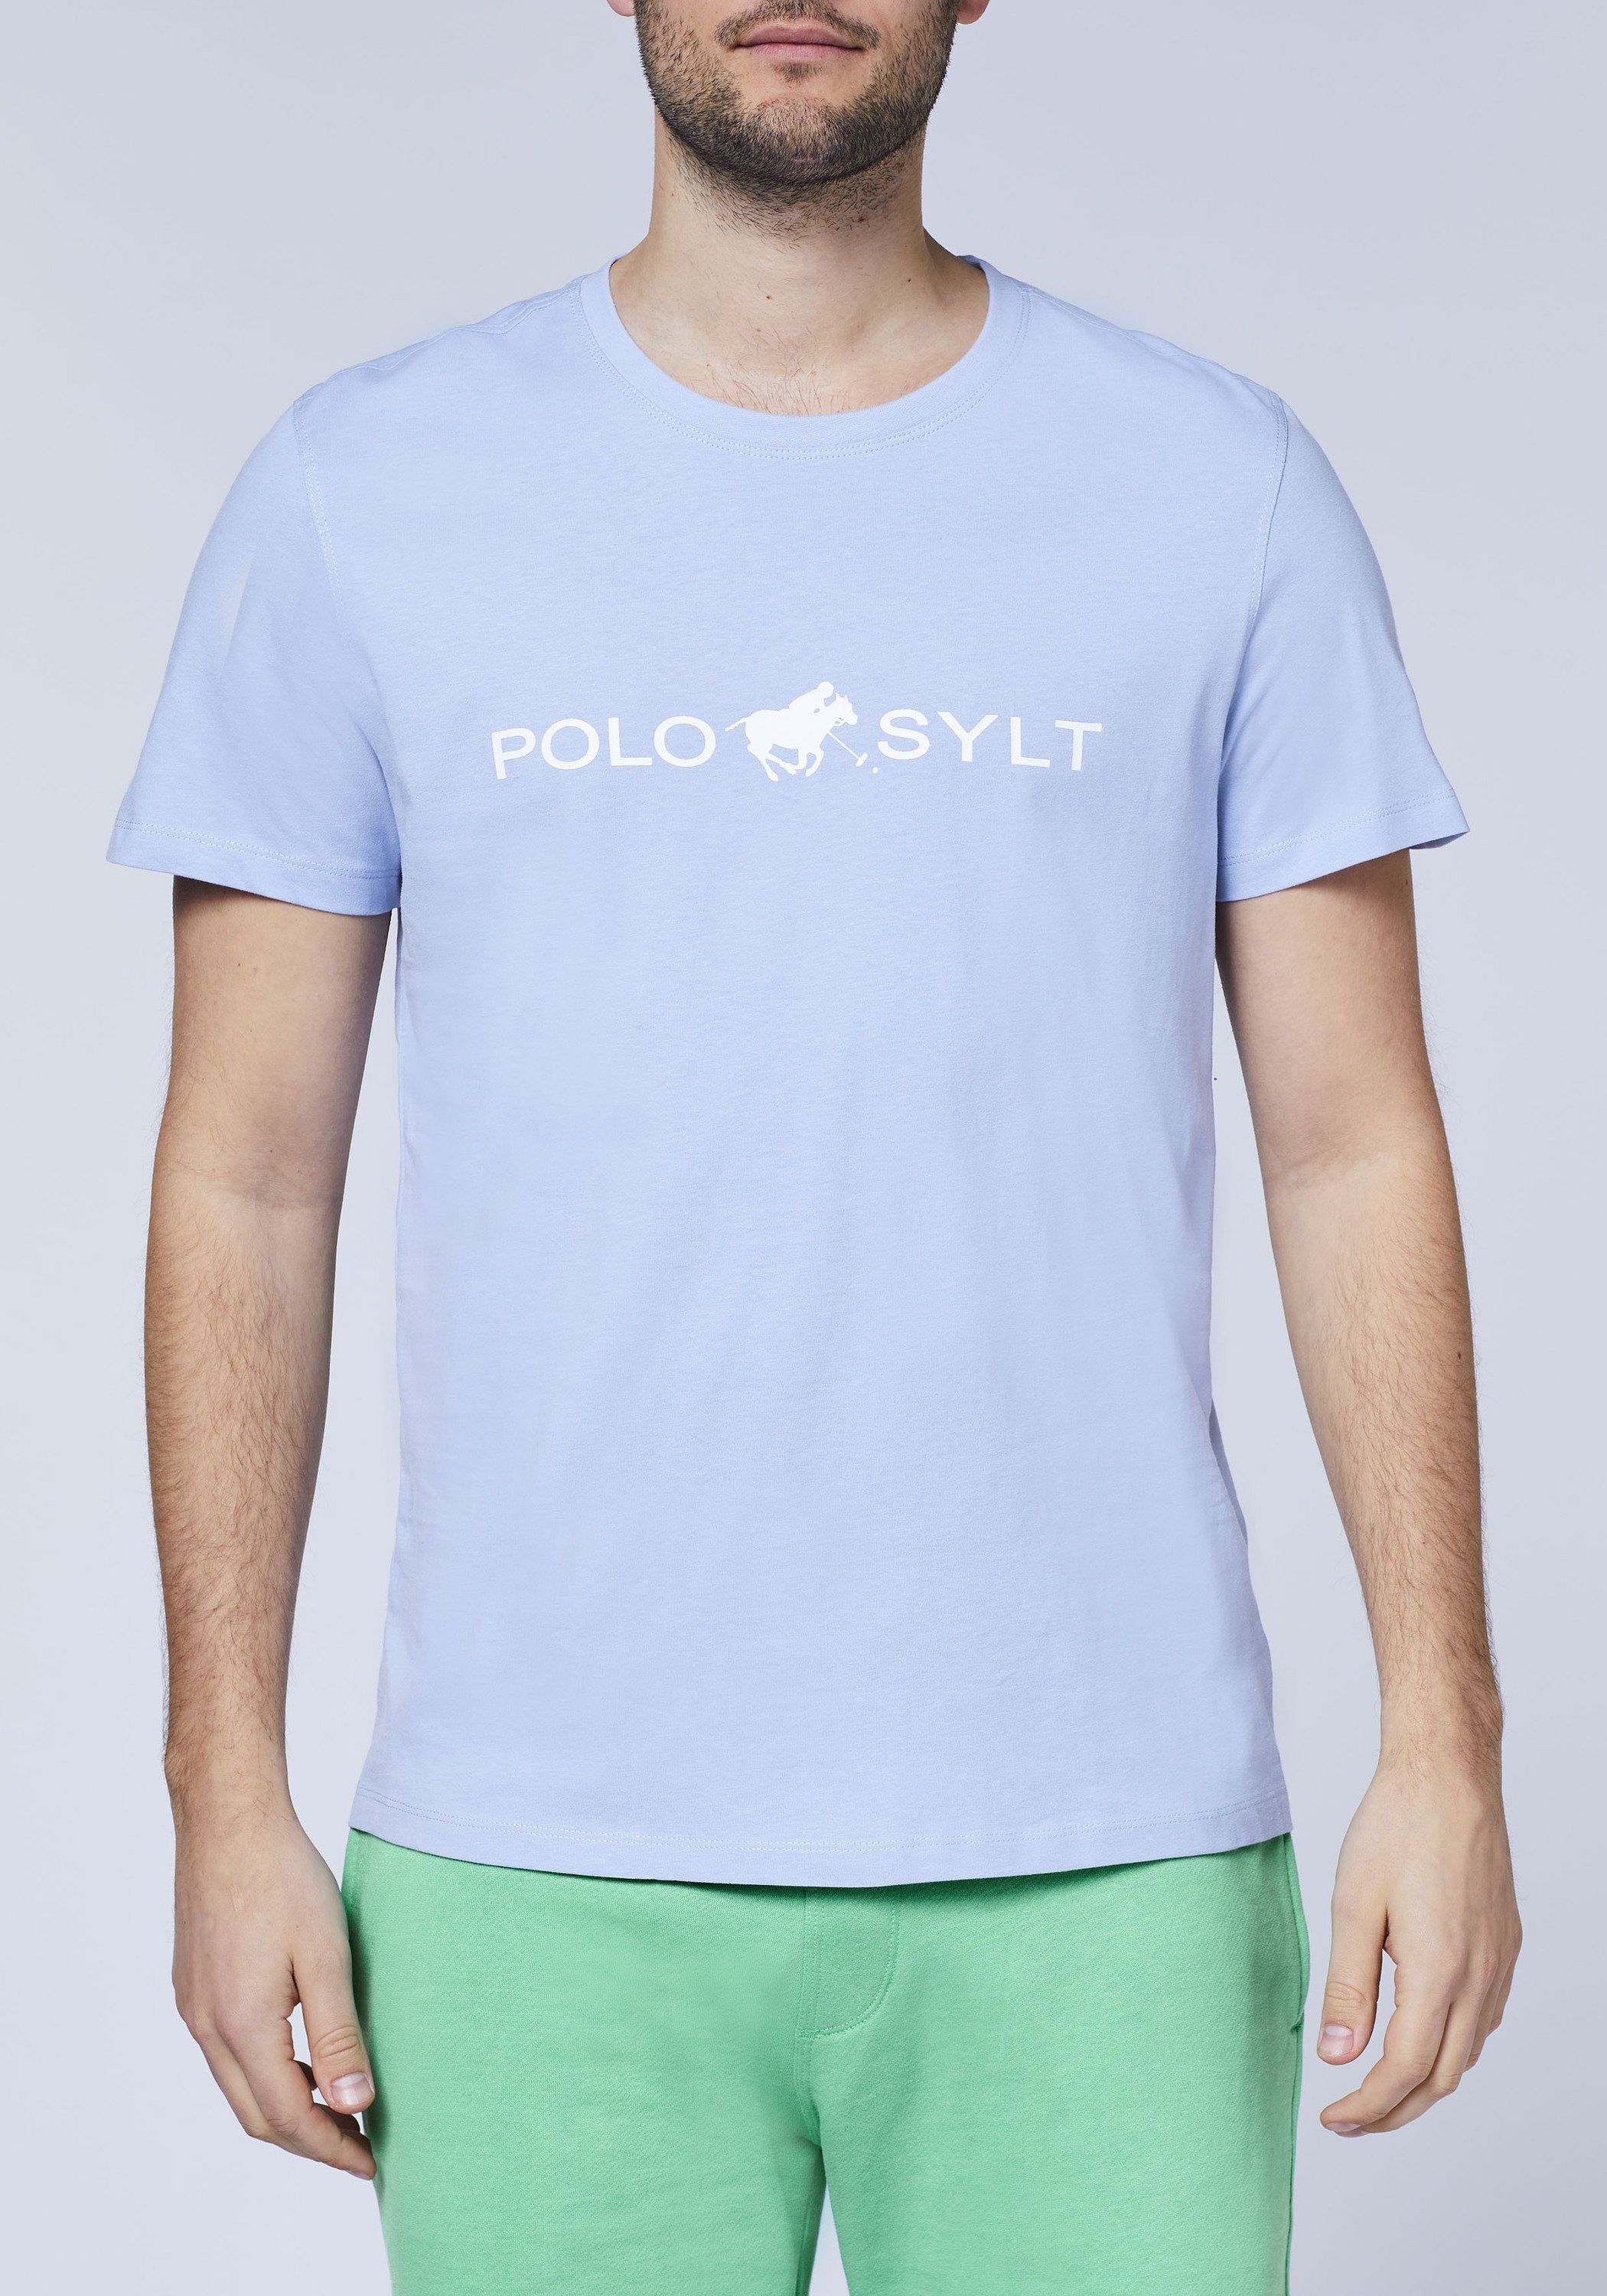 Polo Sylt Print-Shirt auffälligem 16-3922 Blue Brunnera Logo-Print mit